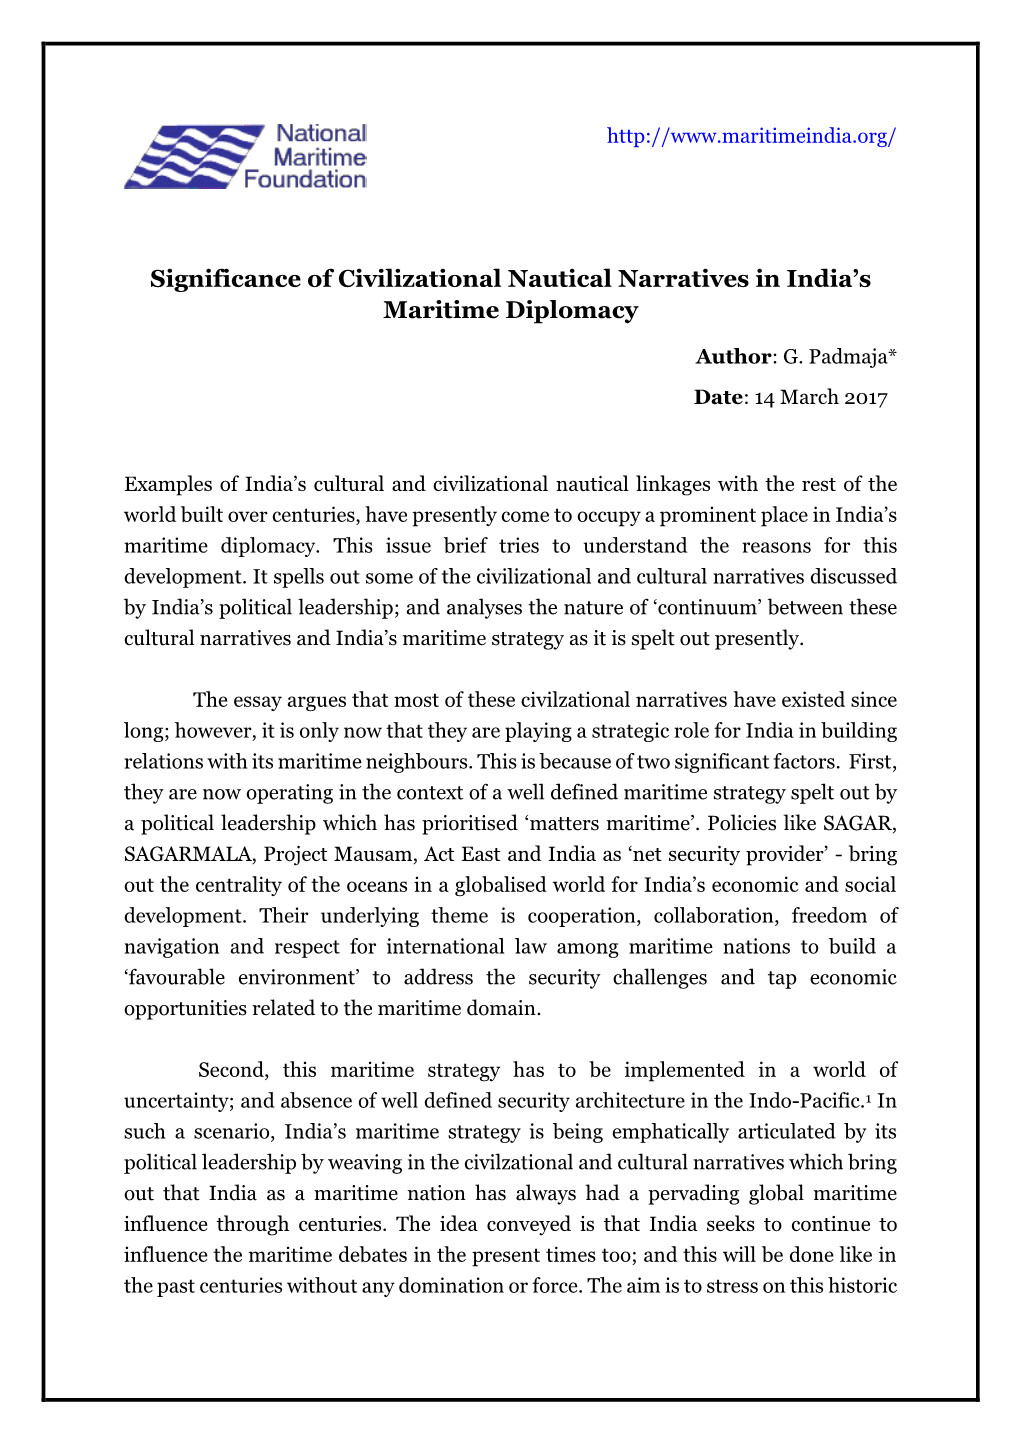 Significance of Civilizational Nautical Narratives in India's Maritime